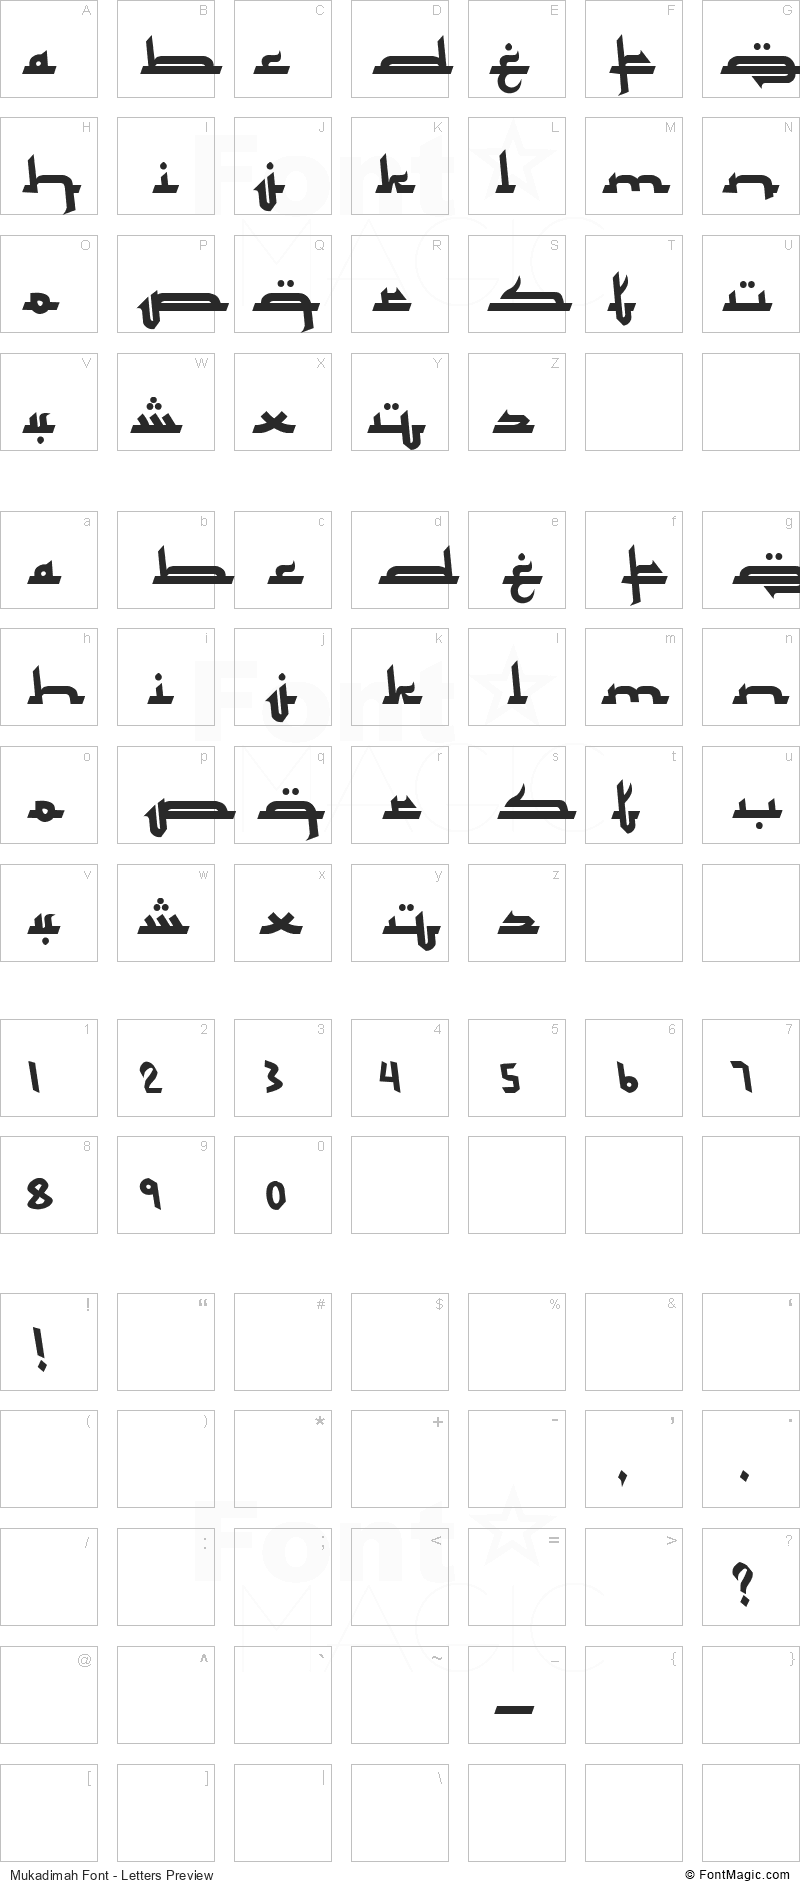 Mukadimah Font - All Latters Preview Chart